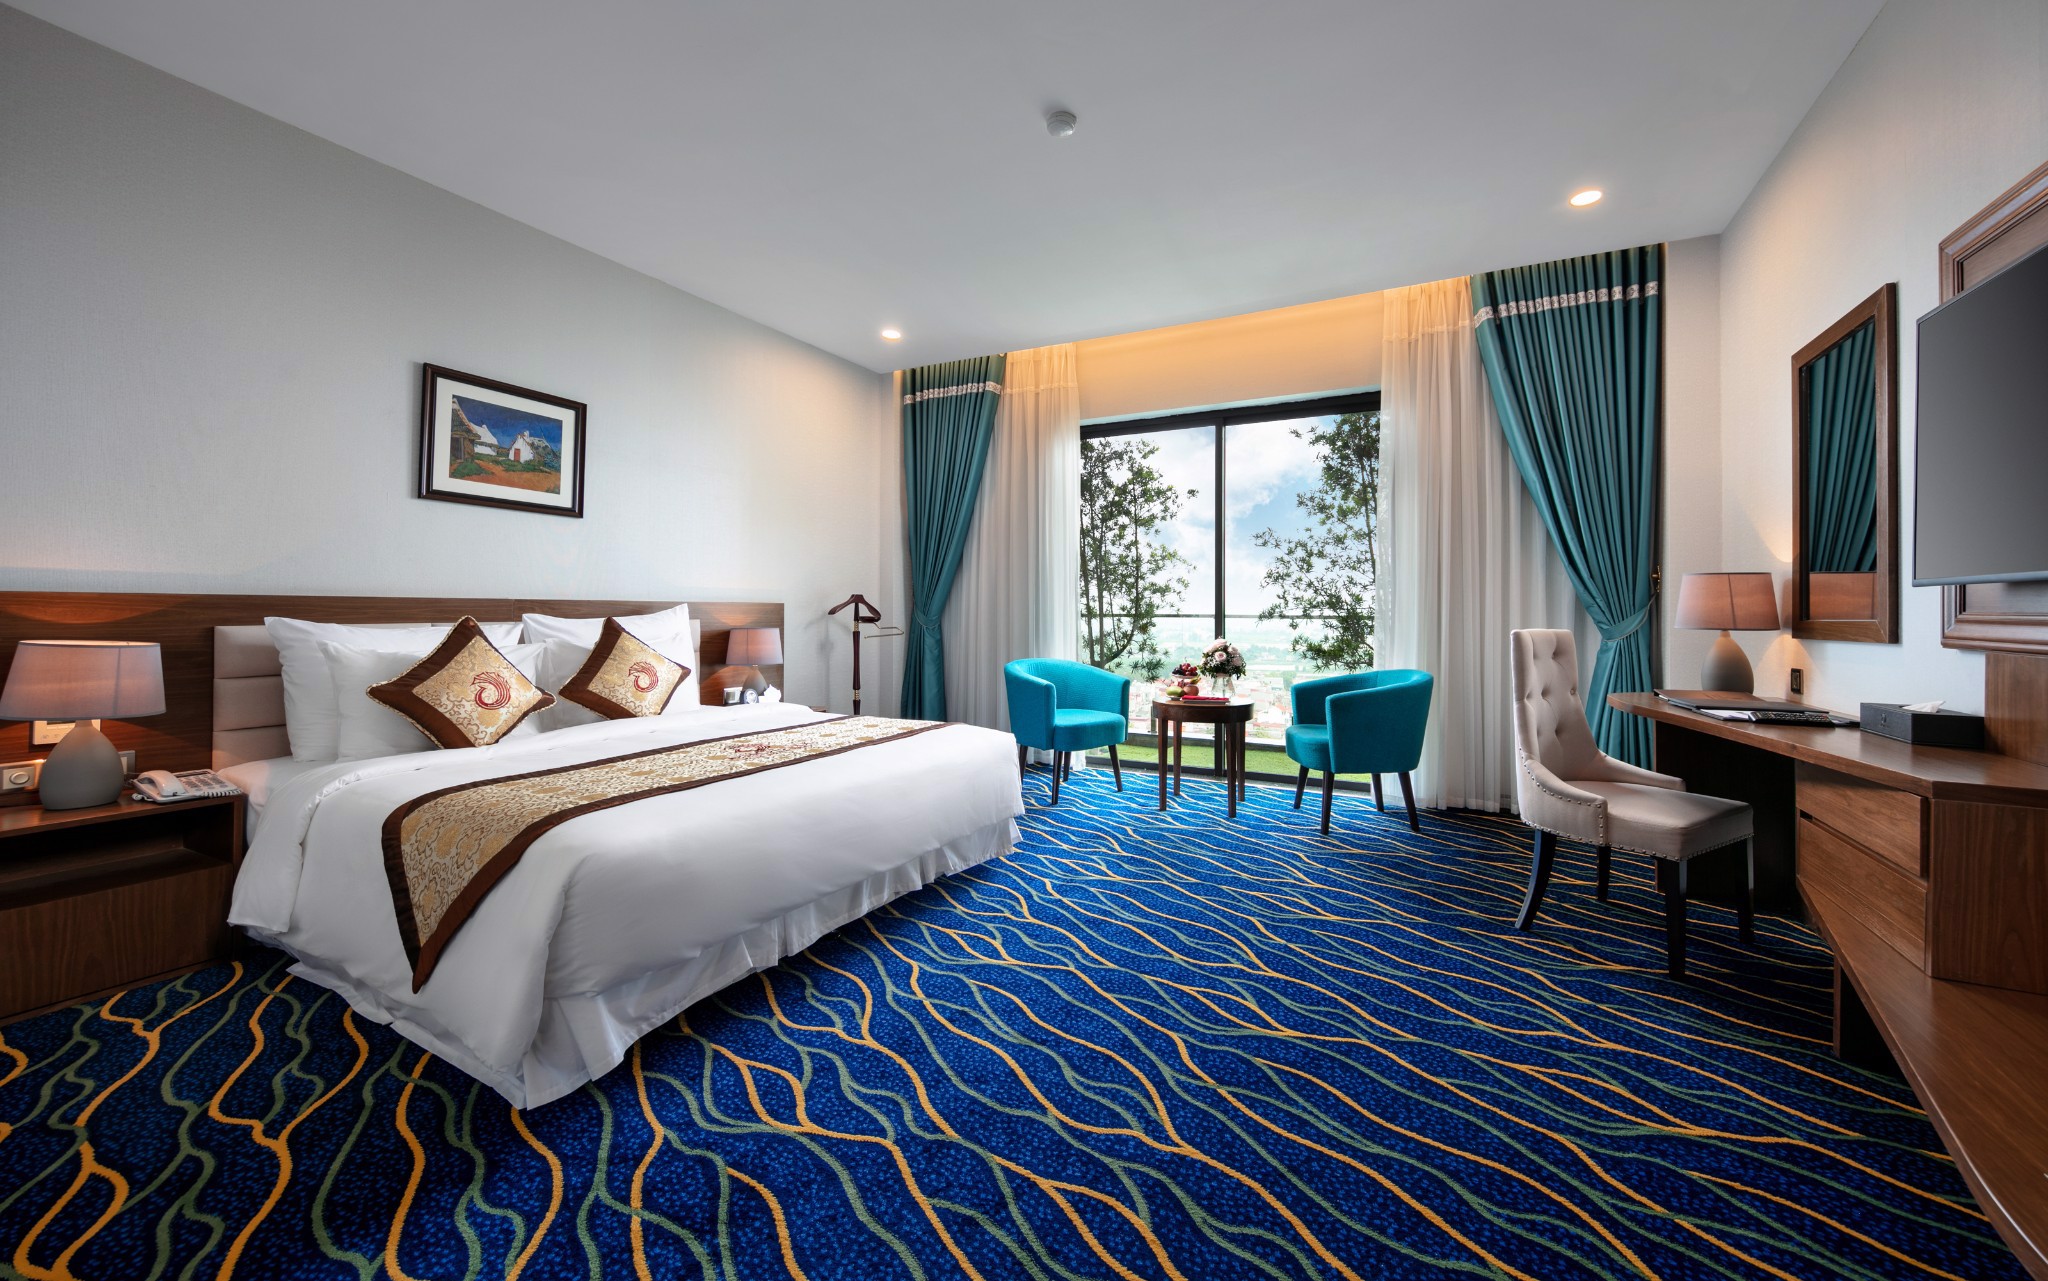 Phoenix Resort Bắc Ninh - Lưu giữ nét đẹp Bắc Ninh